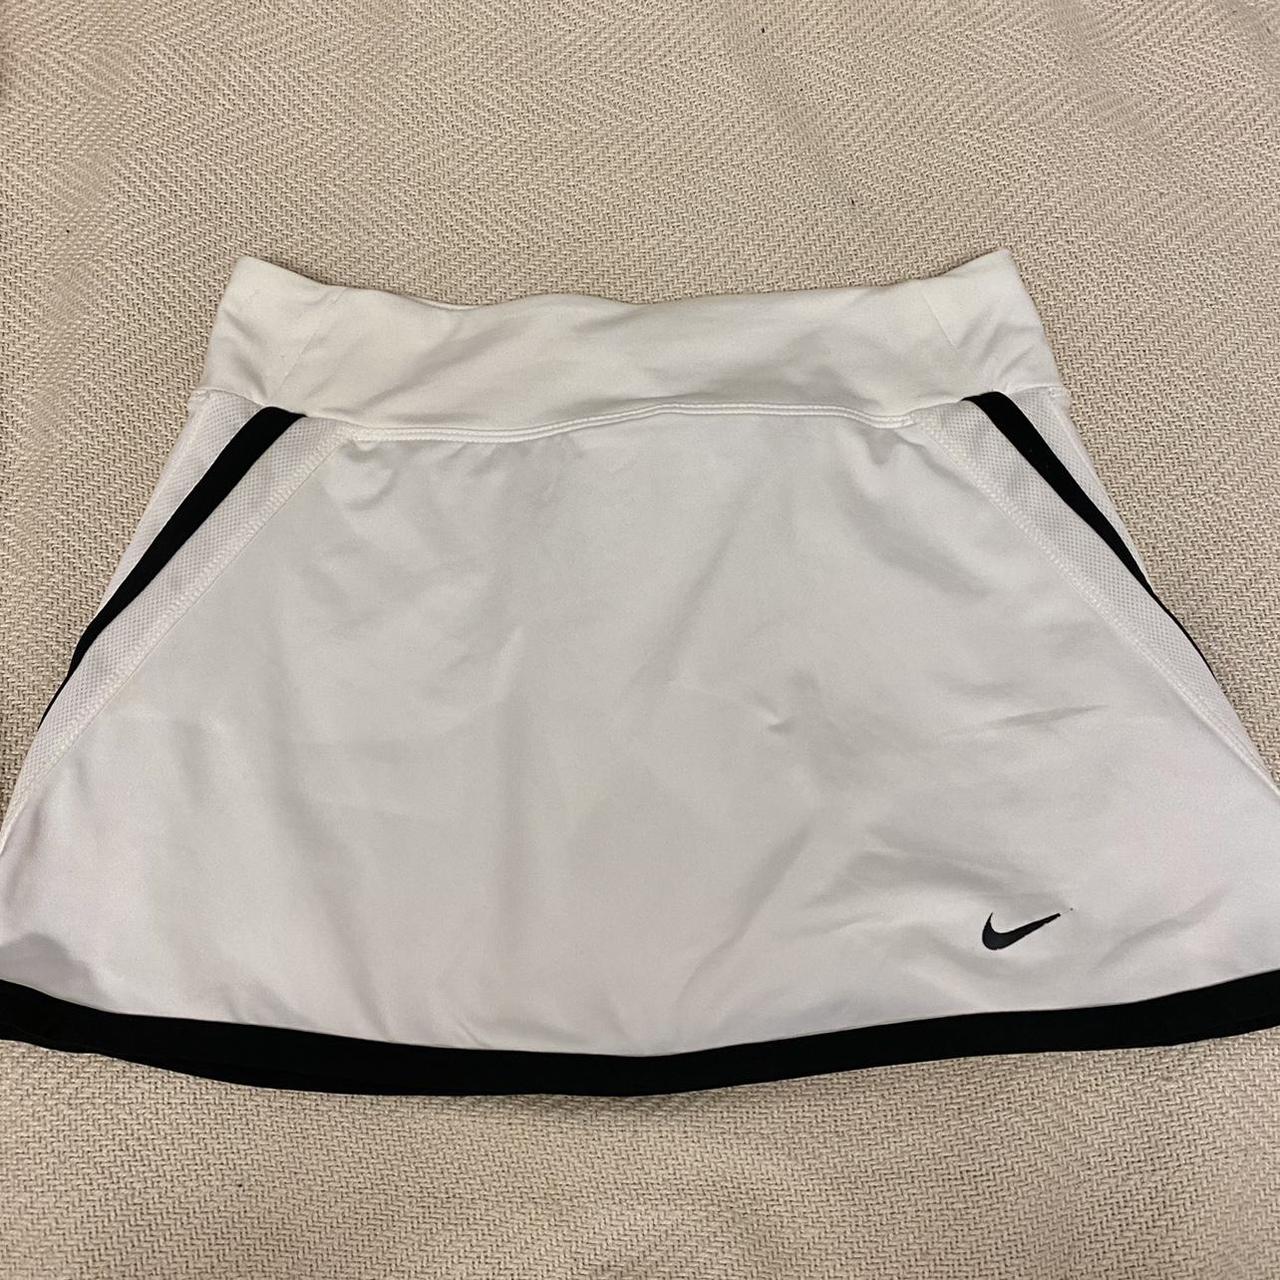 Product Image 1 - dri fit athletic tennis skirt
spandex